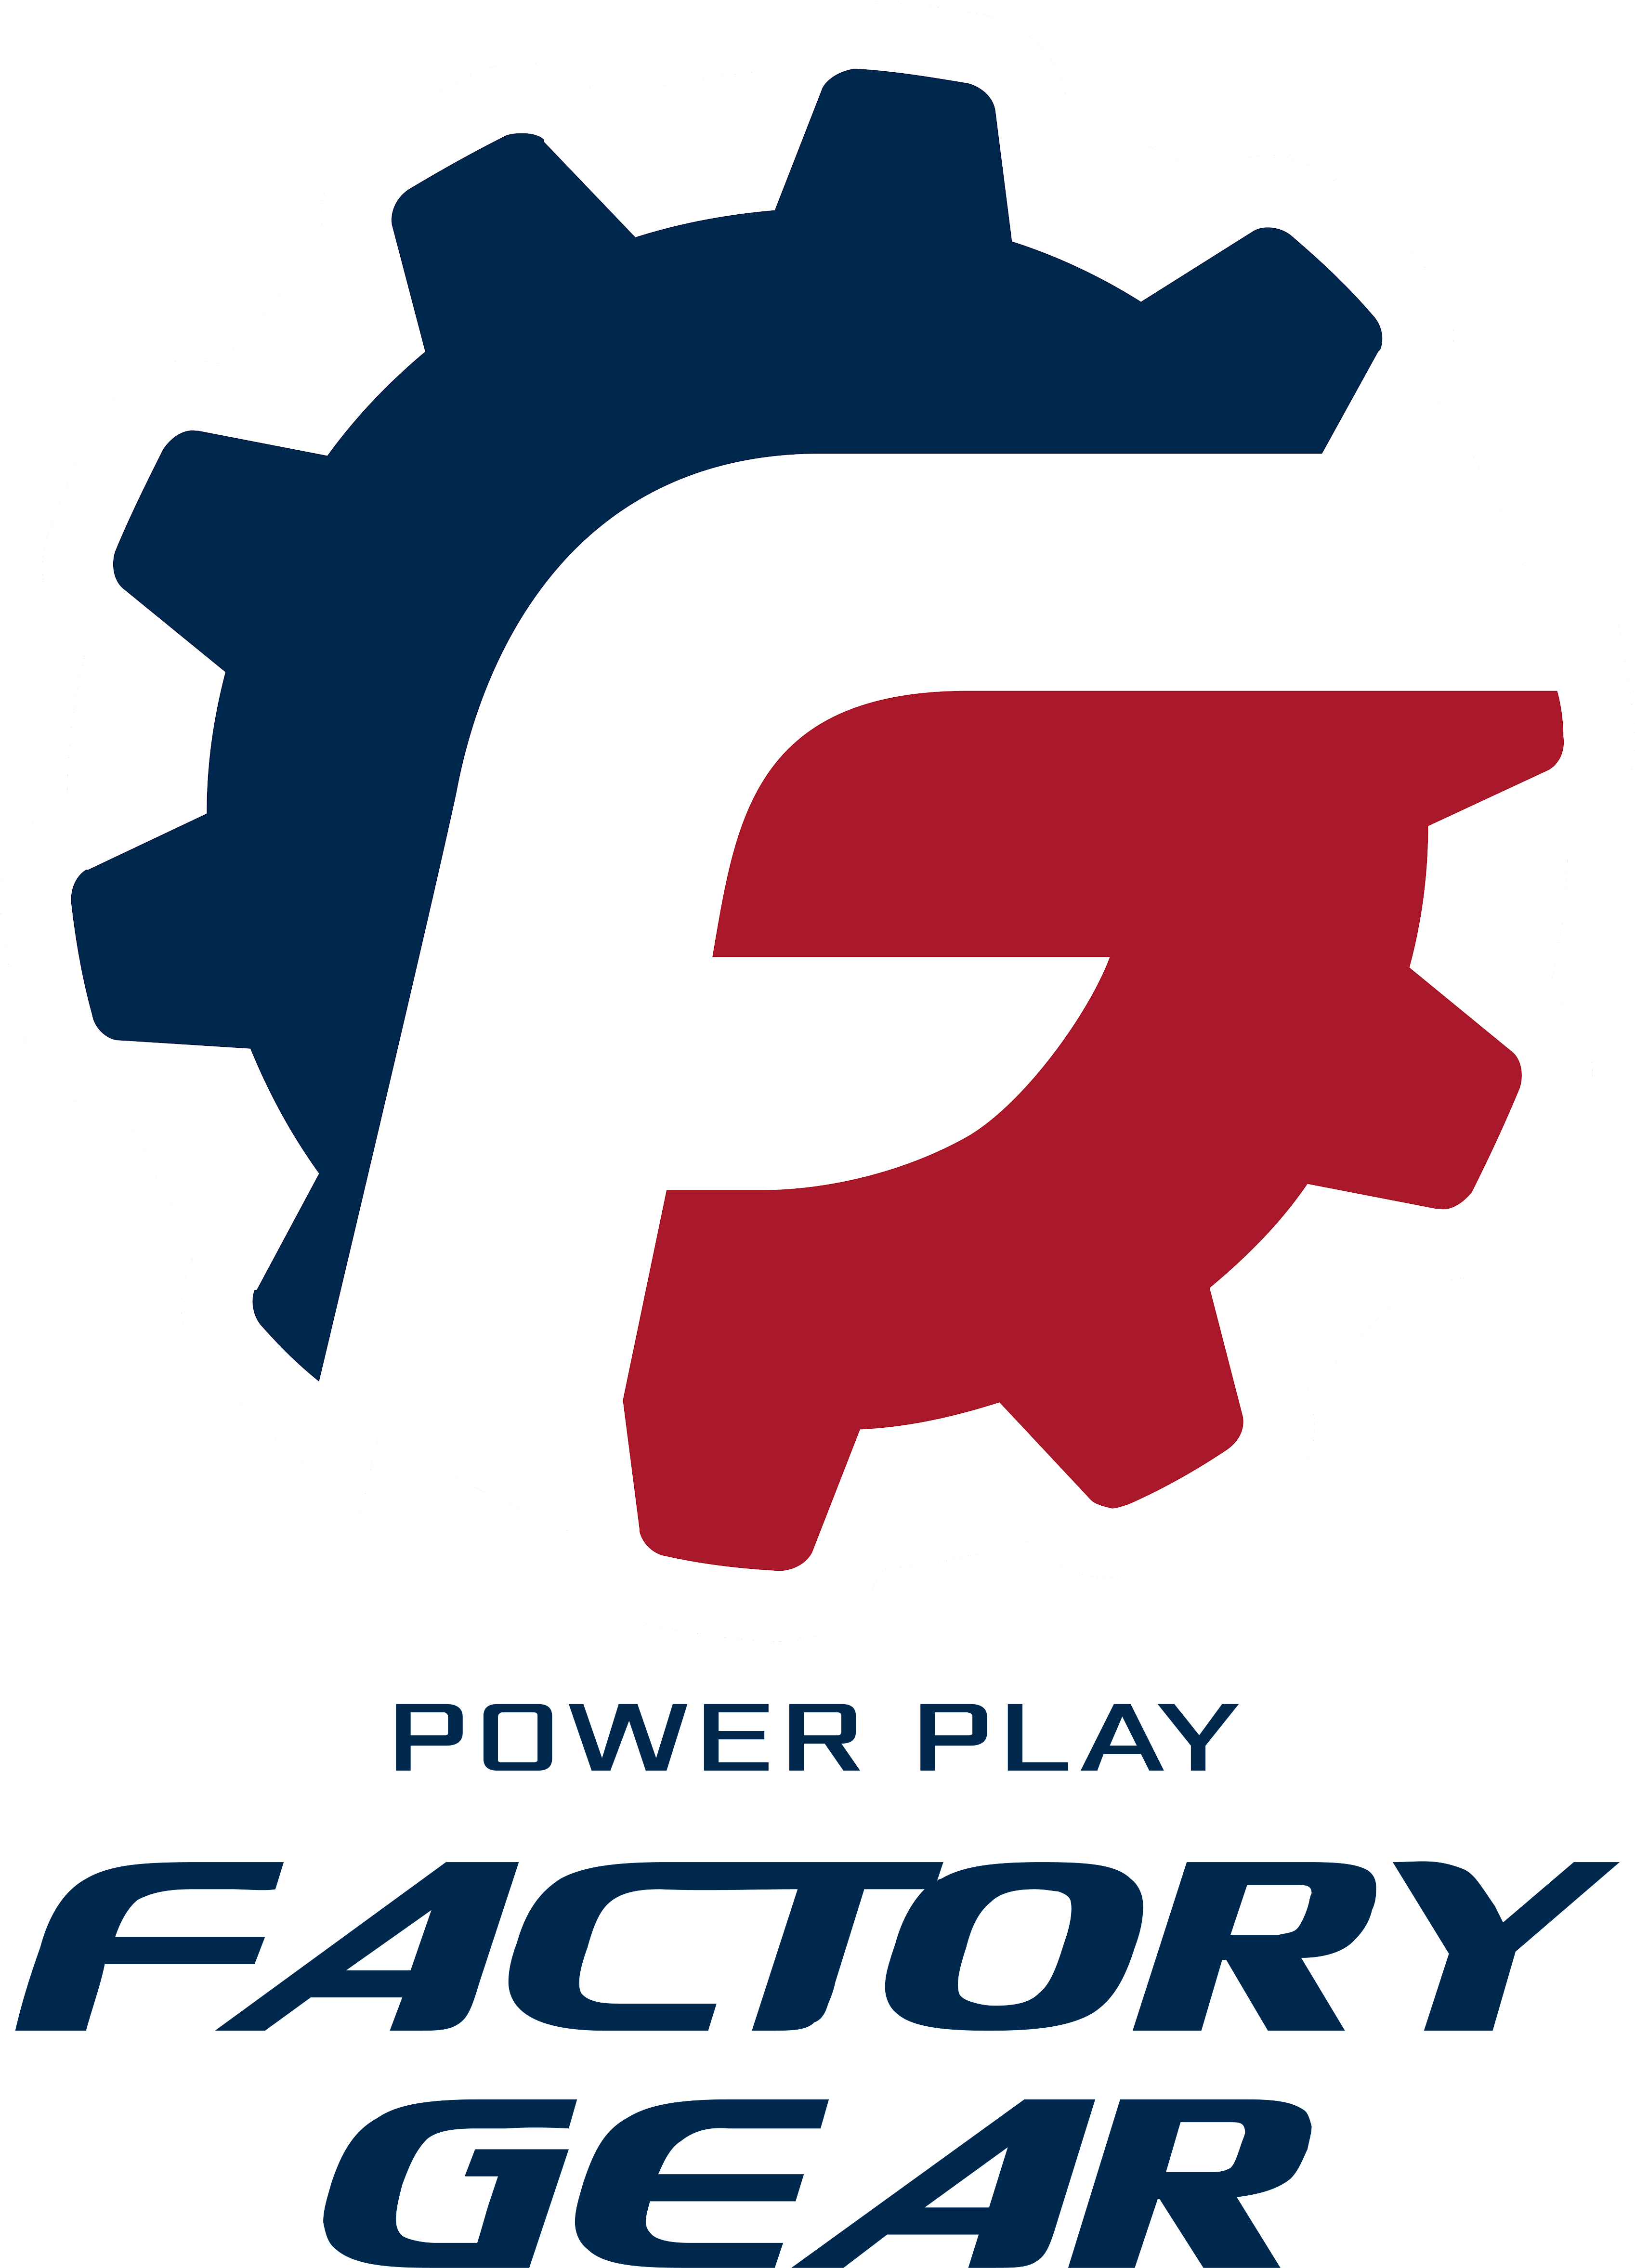 Power Play Factory Gear